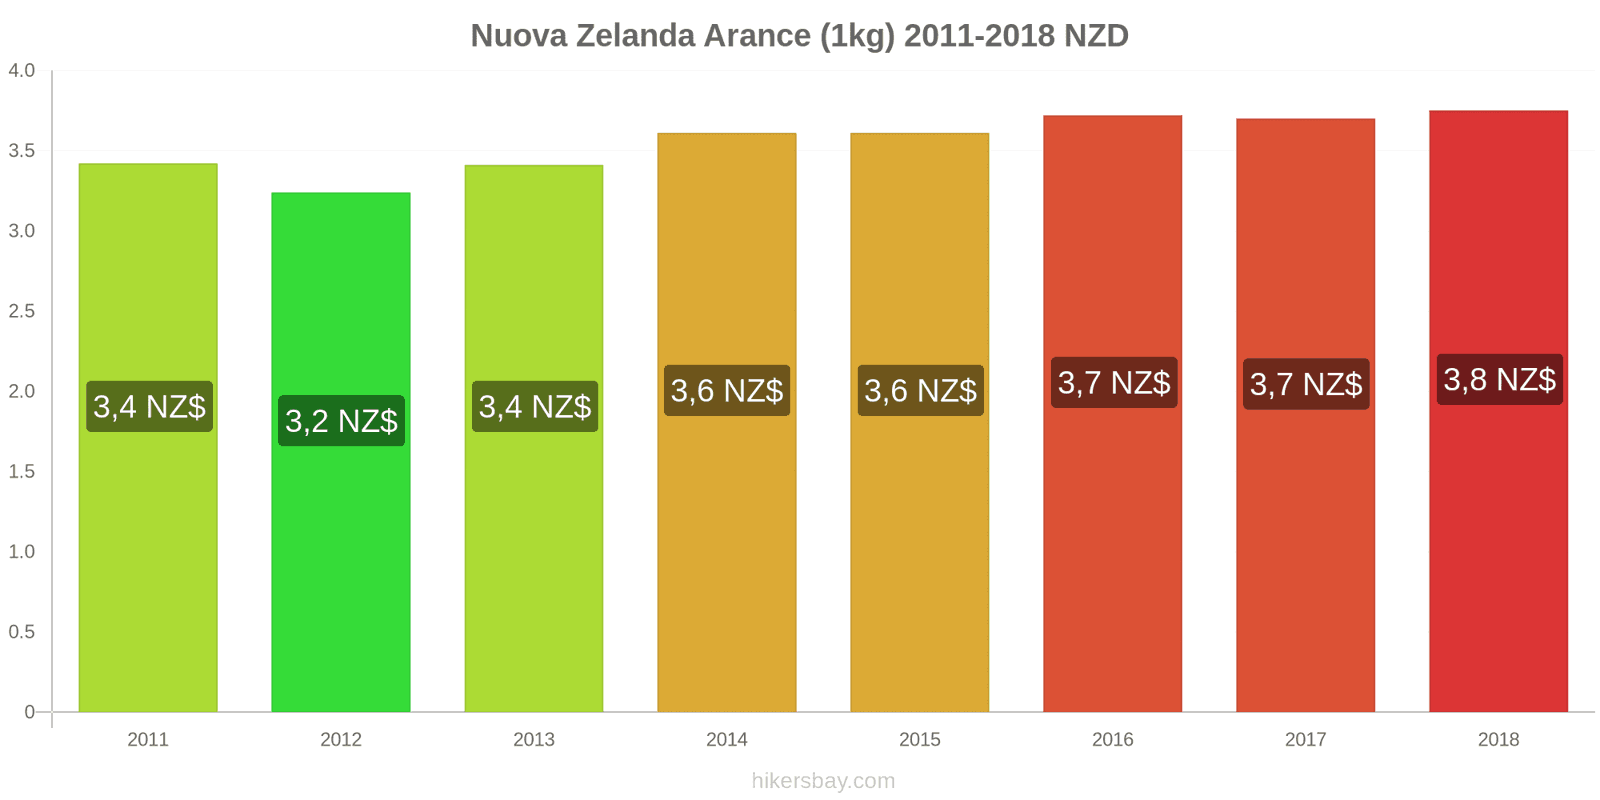 Nuova Zelanda cambi di prezzo Arance (1kg) hikersbay.com